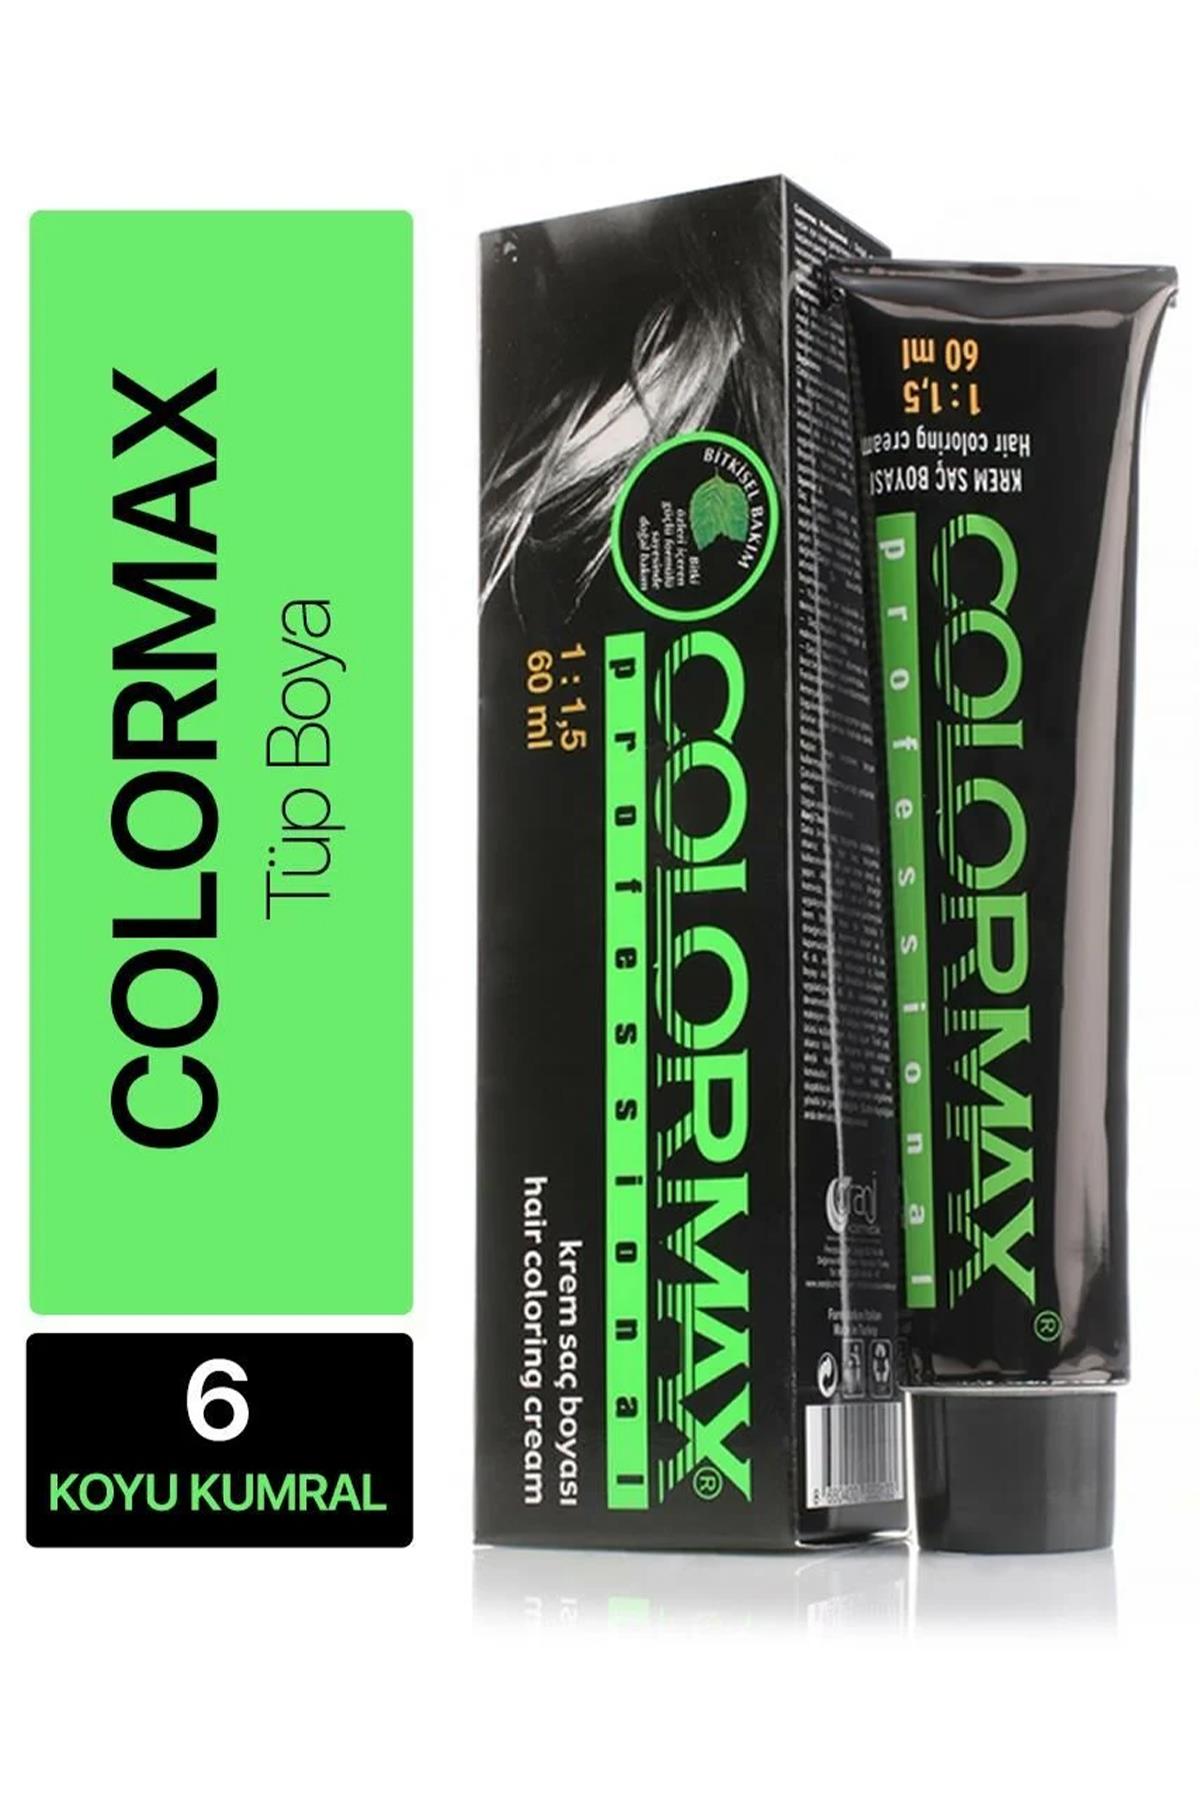 colormax-tup-sac-boyasi-no-6-koyu-kumral-60-ml-7914-1.jpg